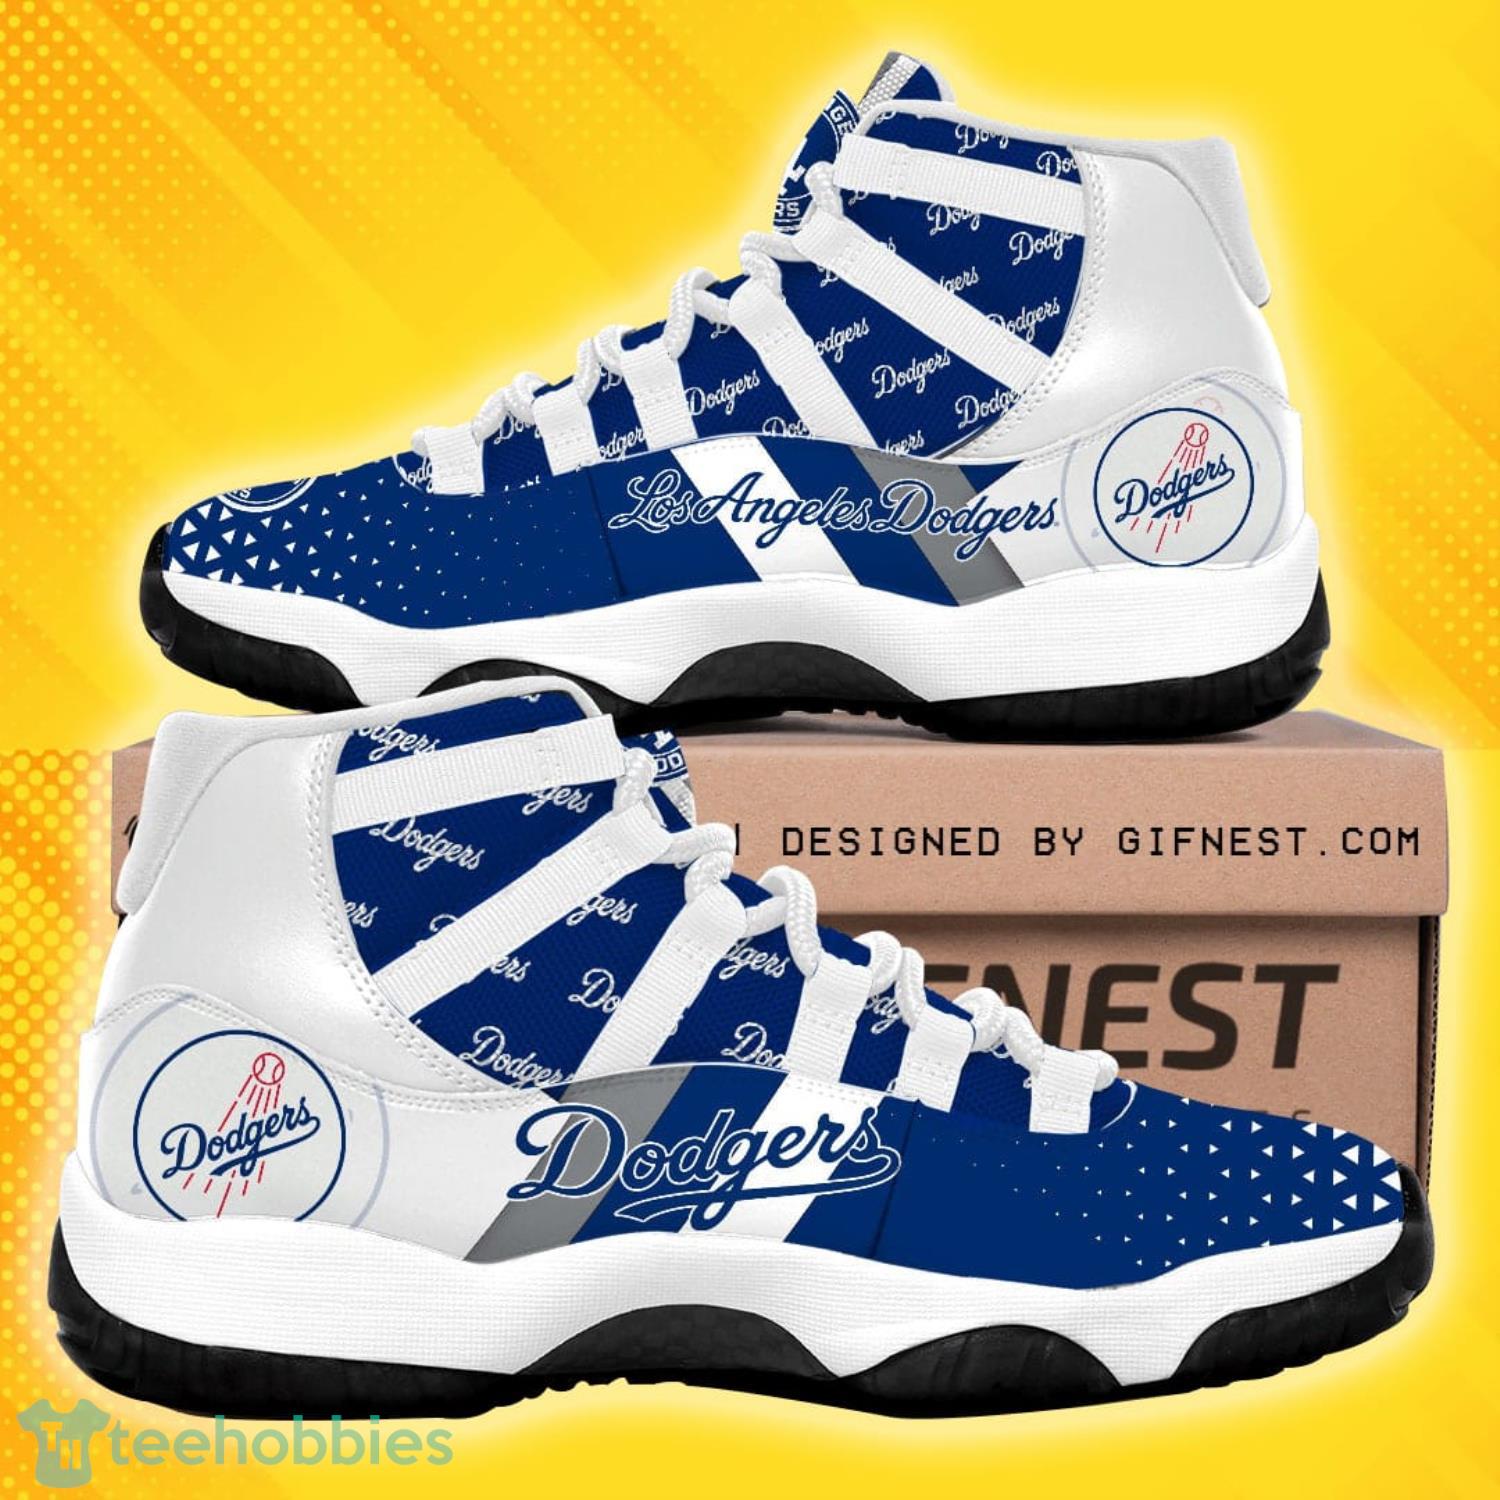 LA Dodgers Baseball Team Air Jordan 11 Shoes For Fans Product Photo 1